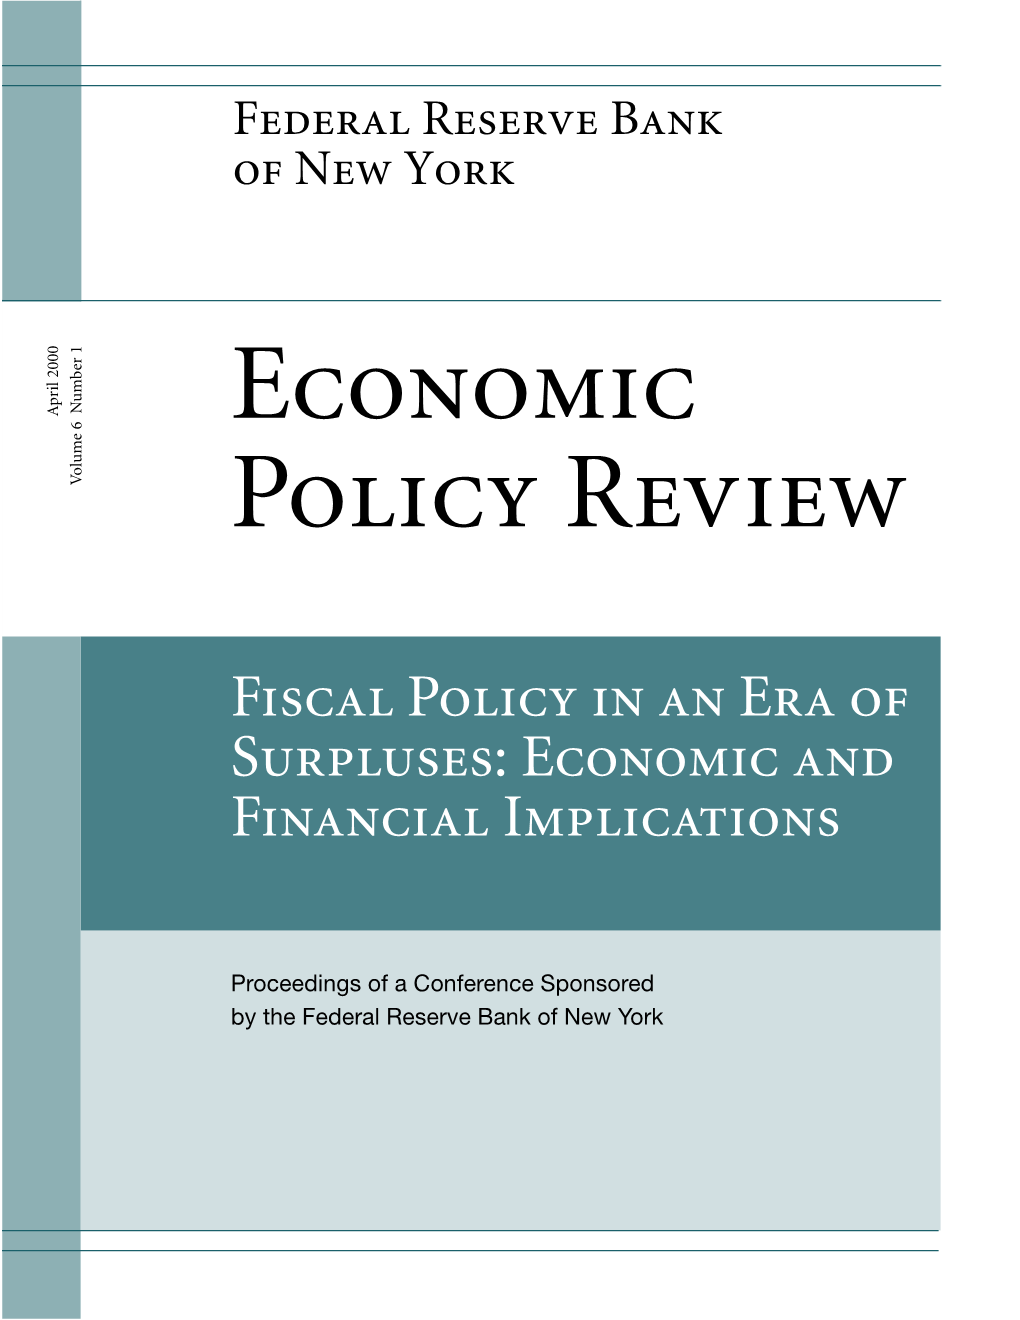 Economic Policy Review Advisory Board